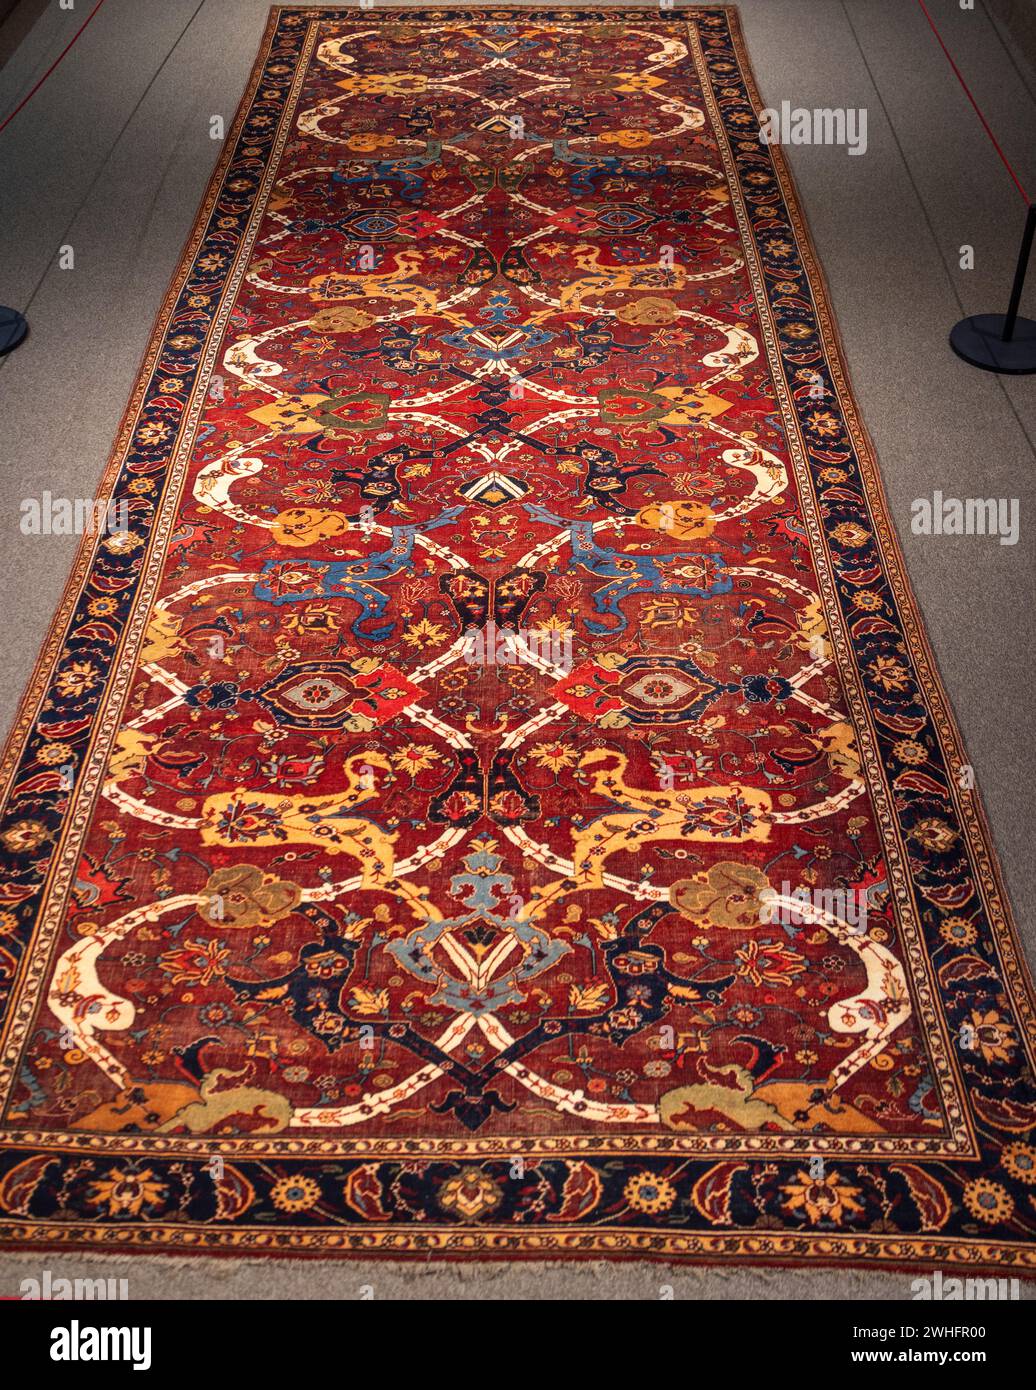 17th century Kerman Safavid carpet, the Carpet Museum of Iran, Tehran, Iran Stock Photo